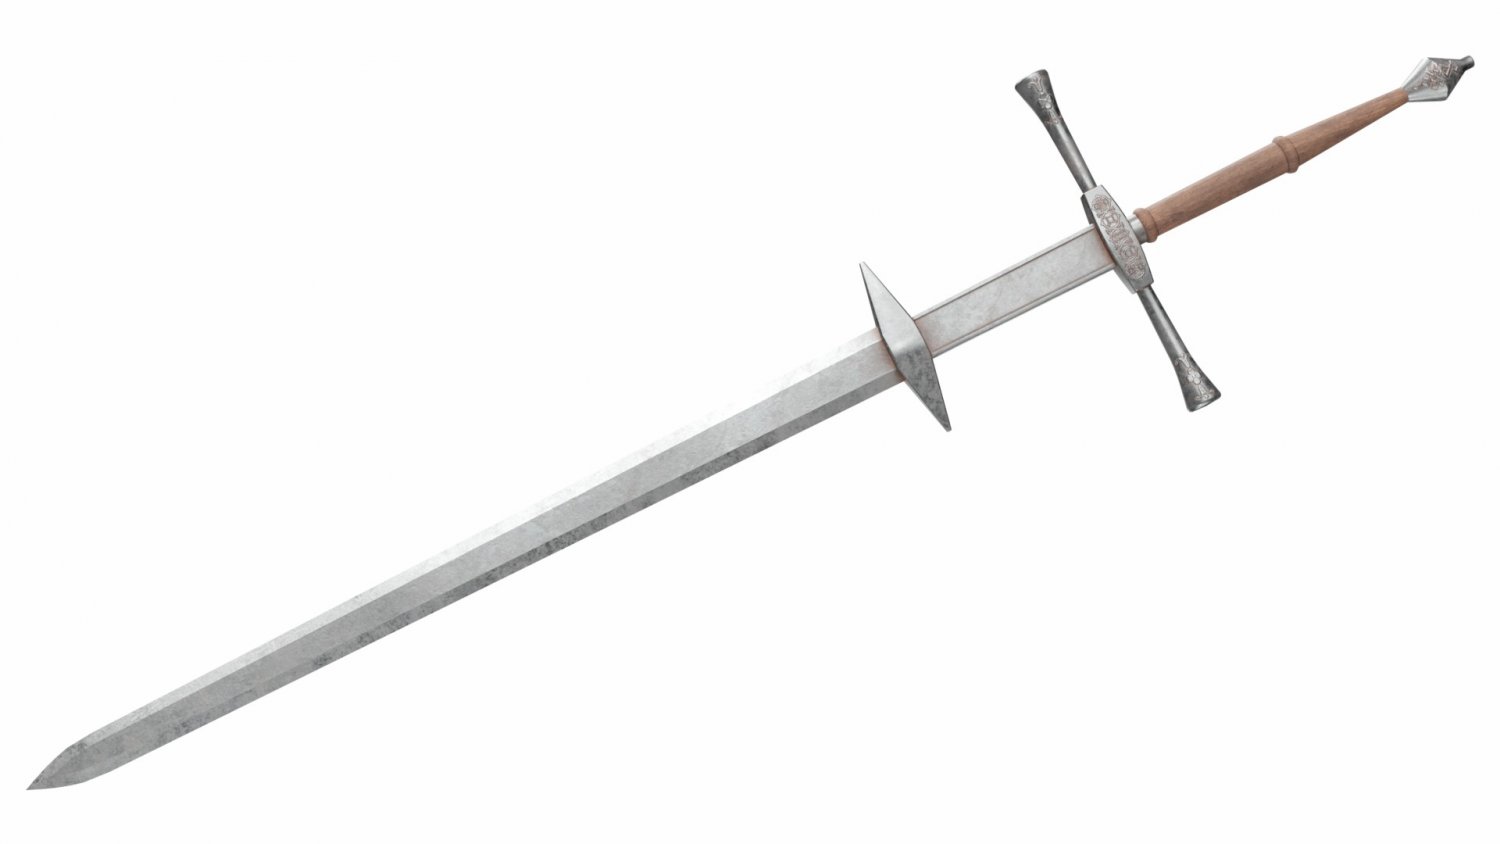 zweihander sword